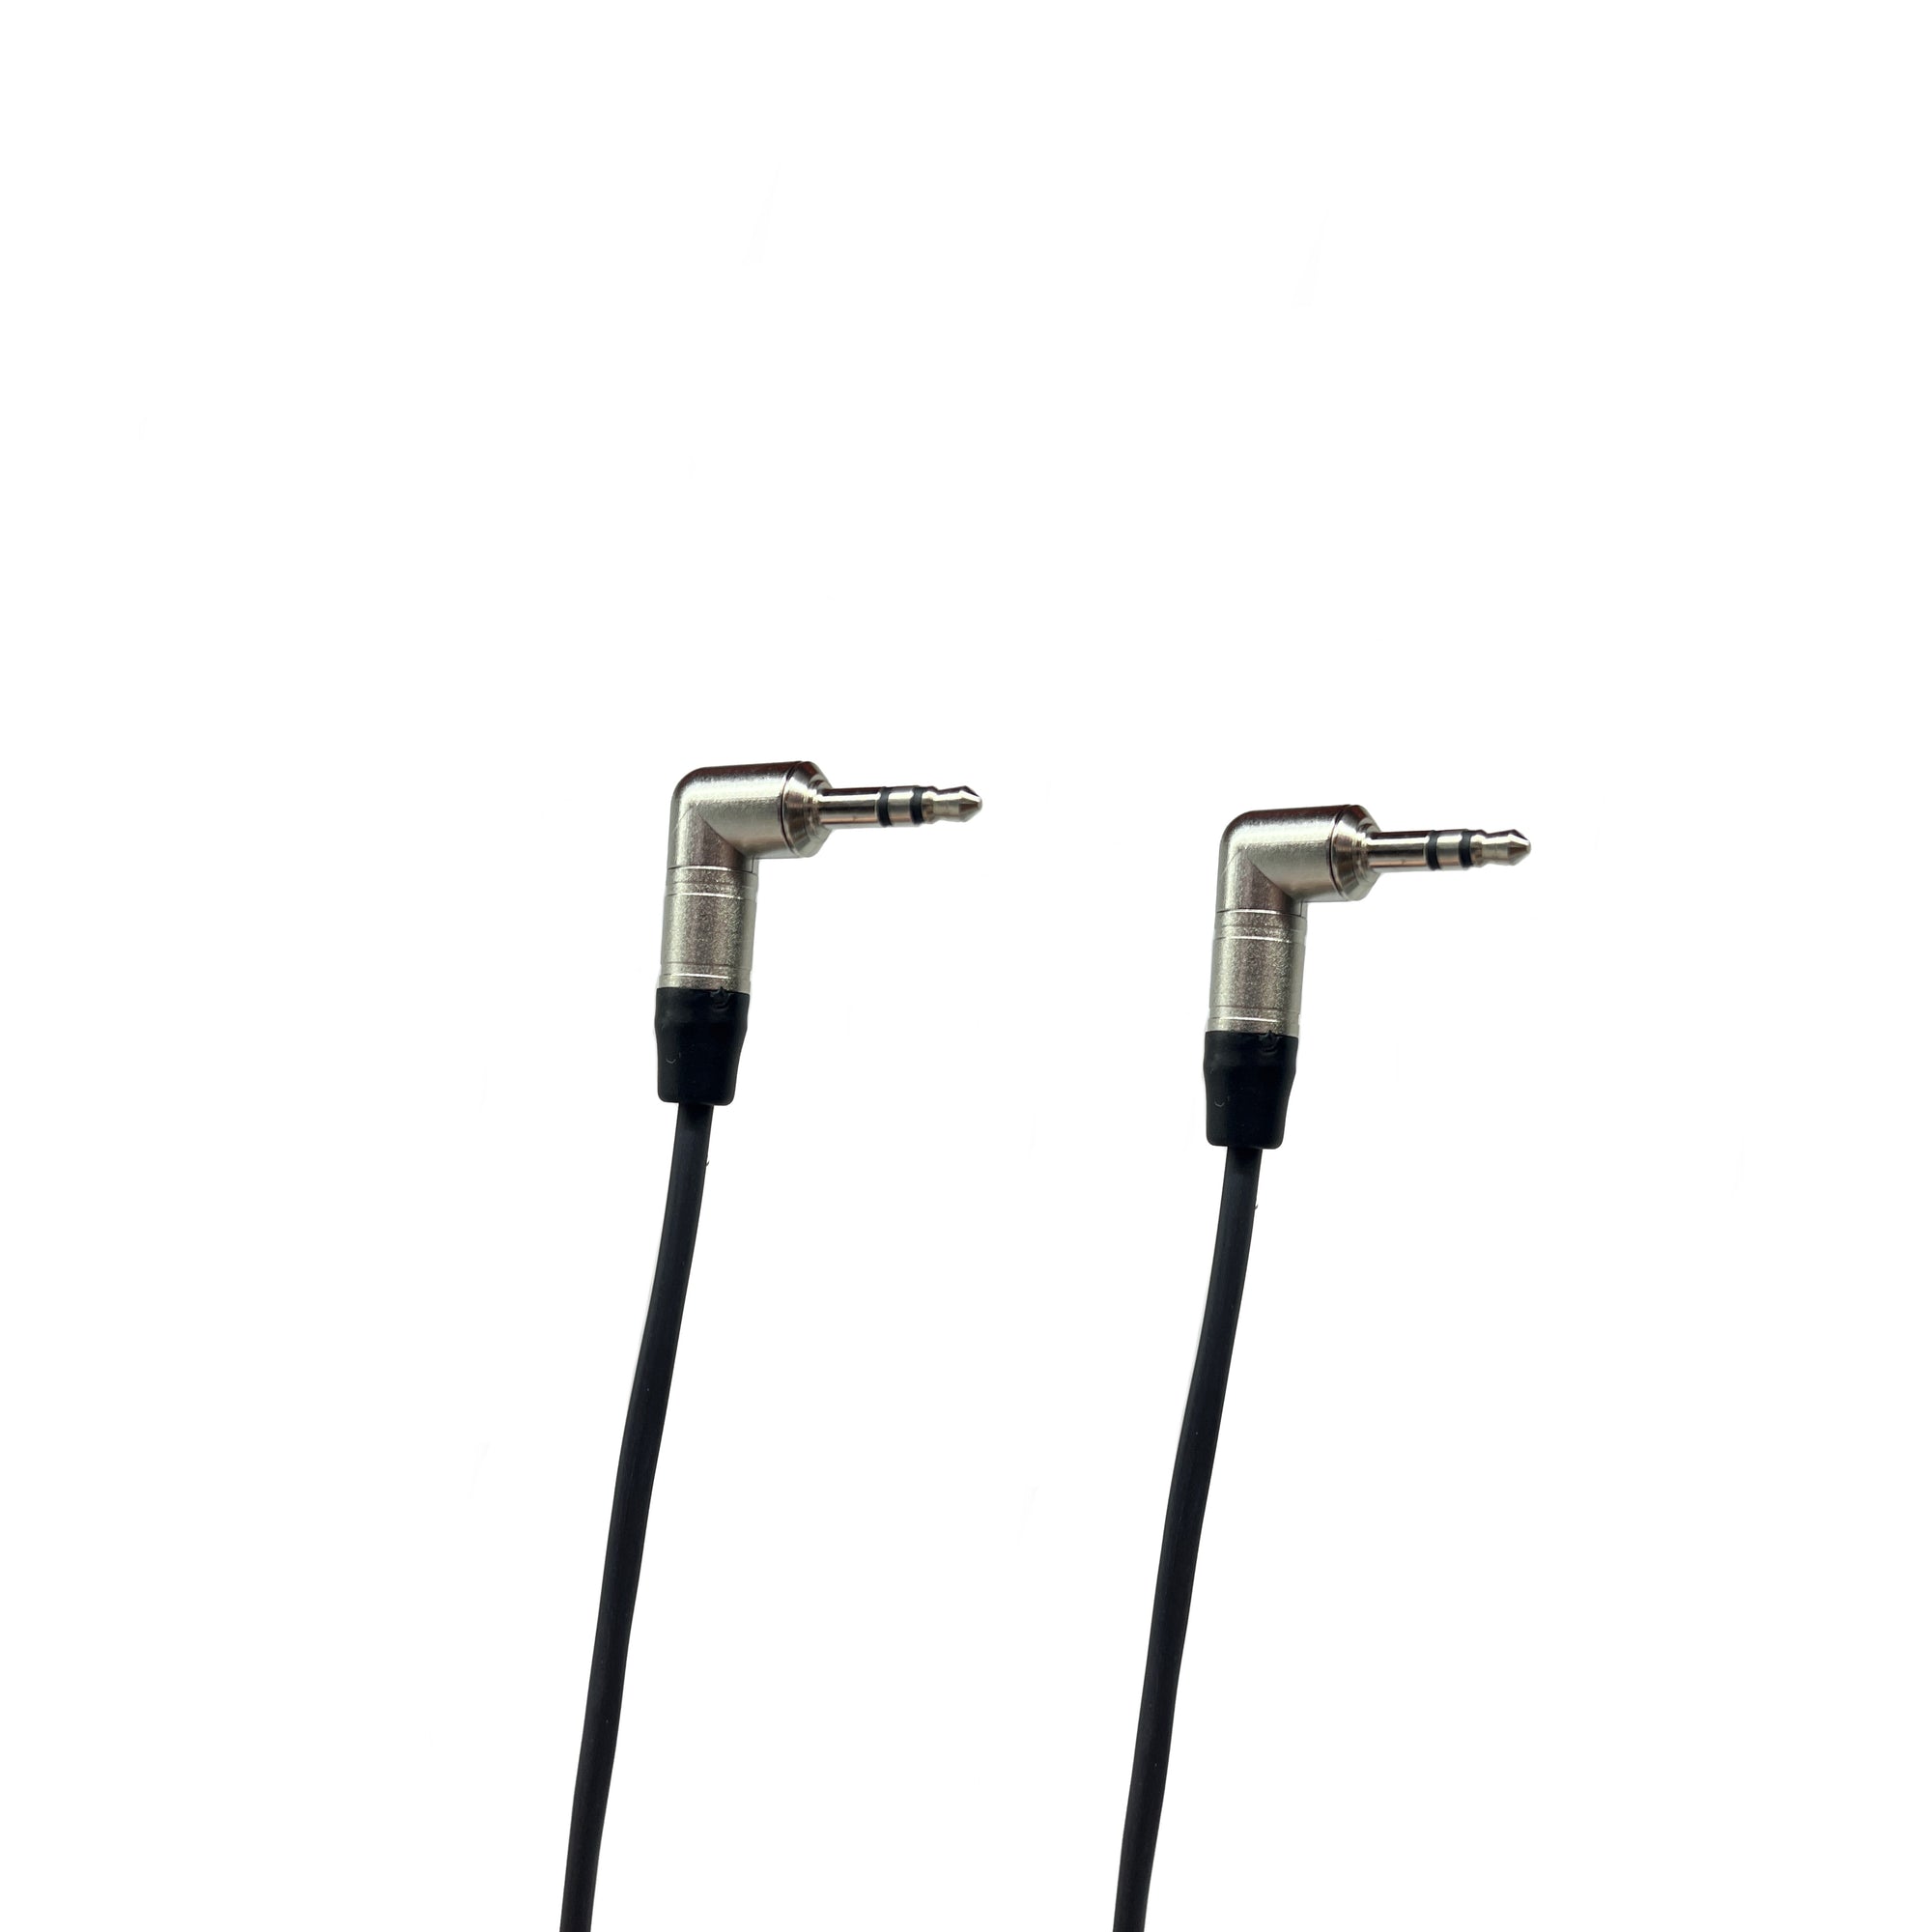 Plenum 3.5mm Right Angle Stereo Audio Cable Male to Male - Installation Grade